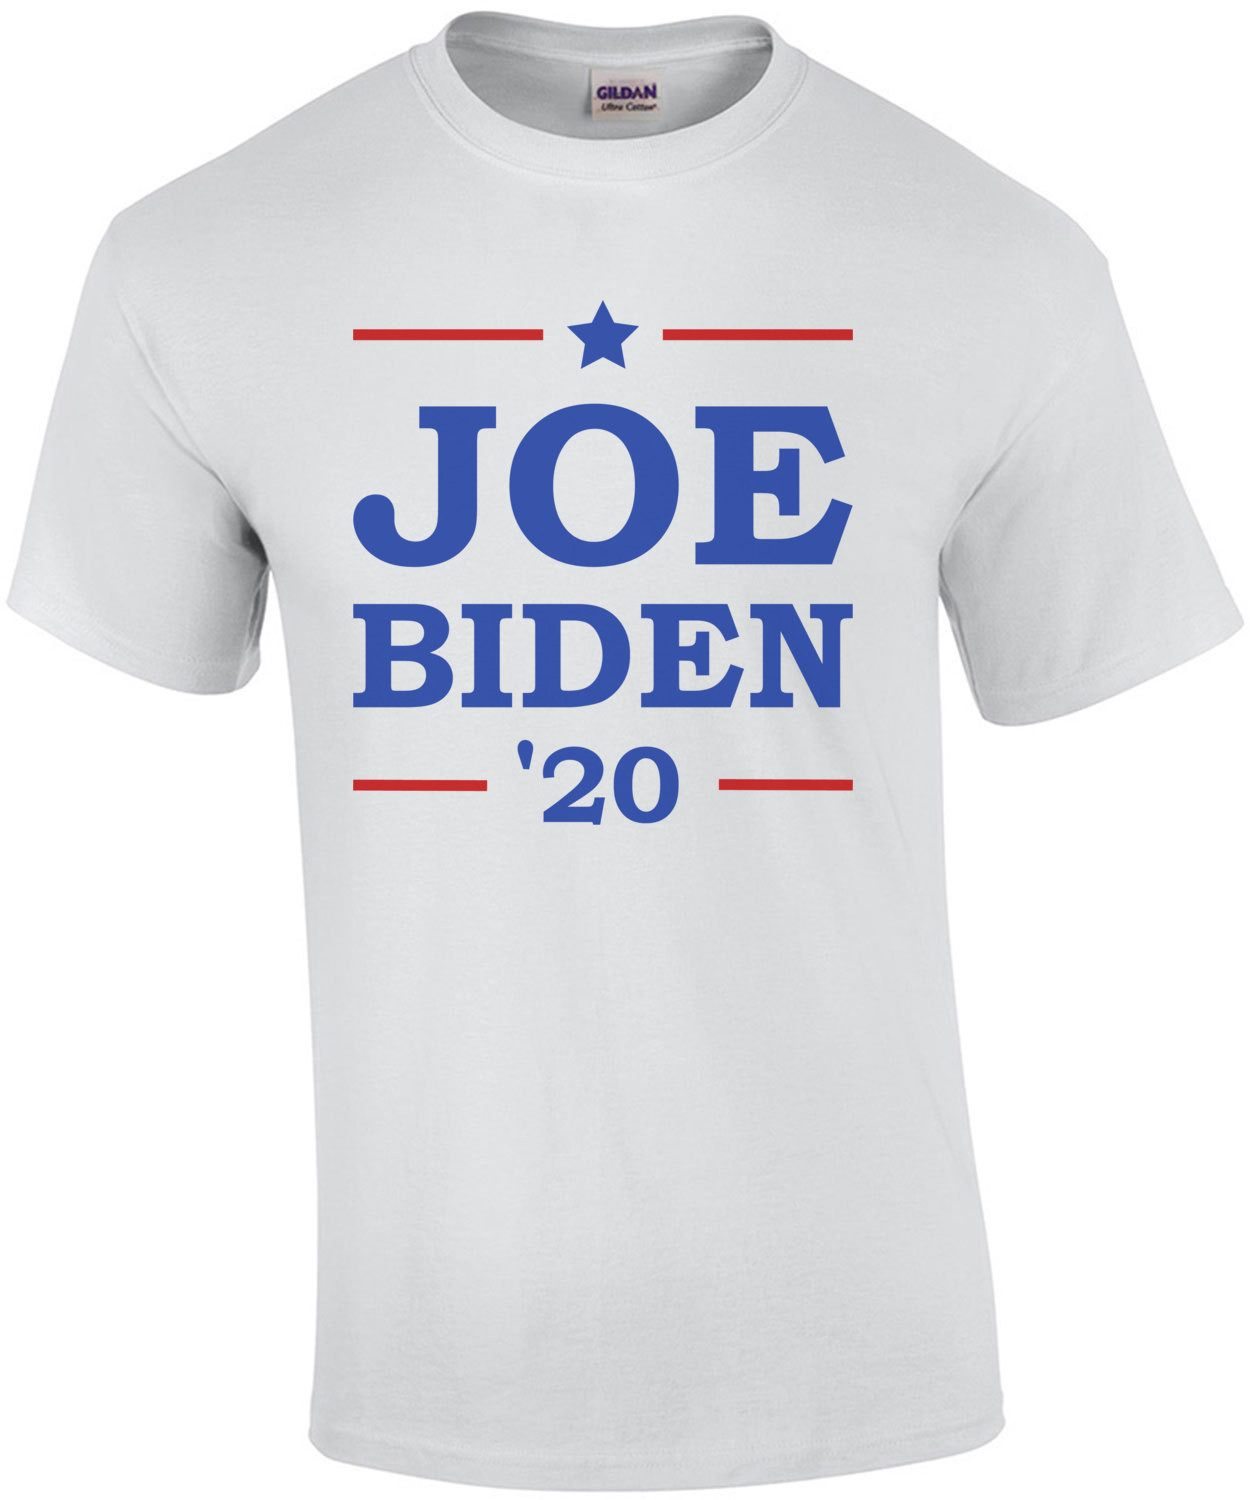 Joe Biden '20 - 2020 Election T-Shirt